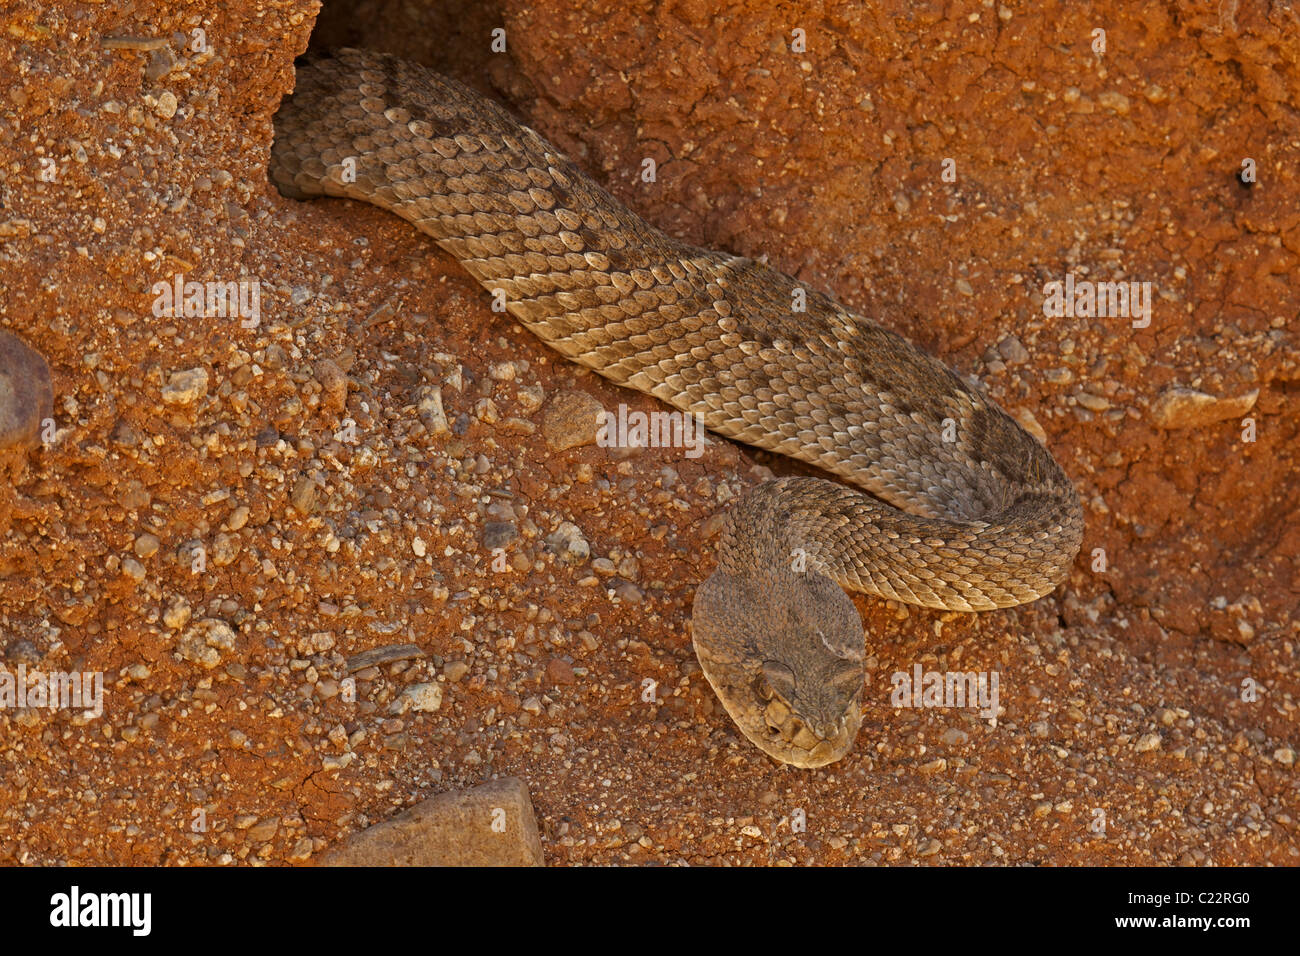 Western Diamond-backed Rattlesnake(s) (Crotalus atrox) -Arizona – USA - Sonoran Desert - Emerging from winter hibernation site Stock Photo